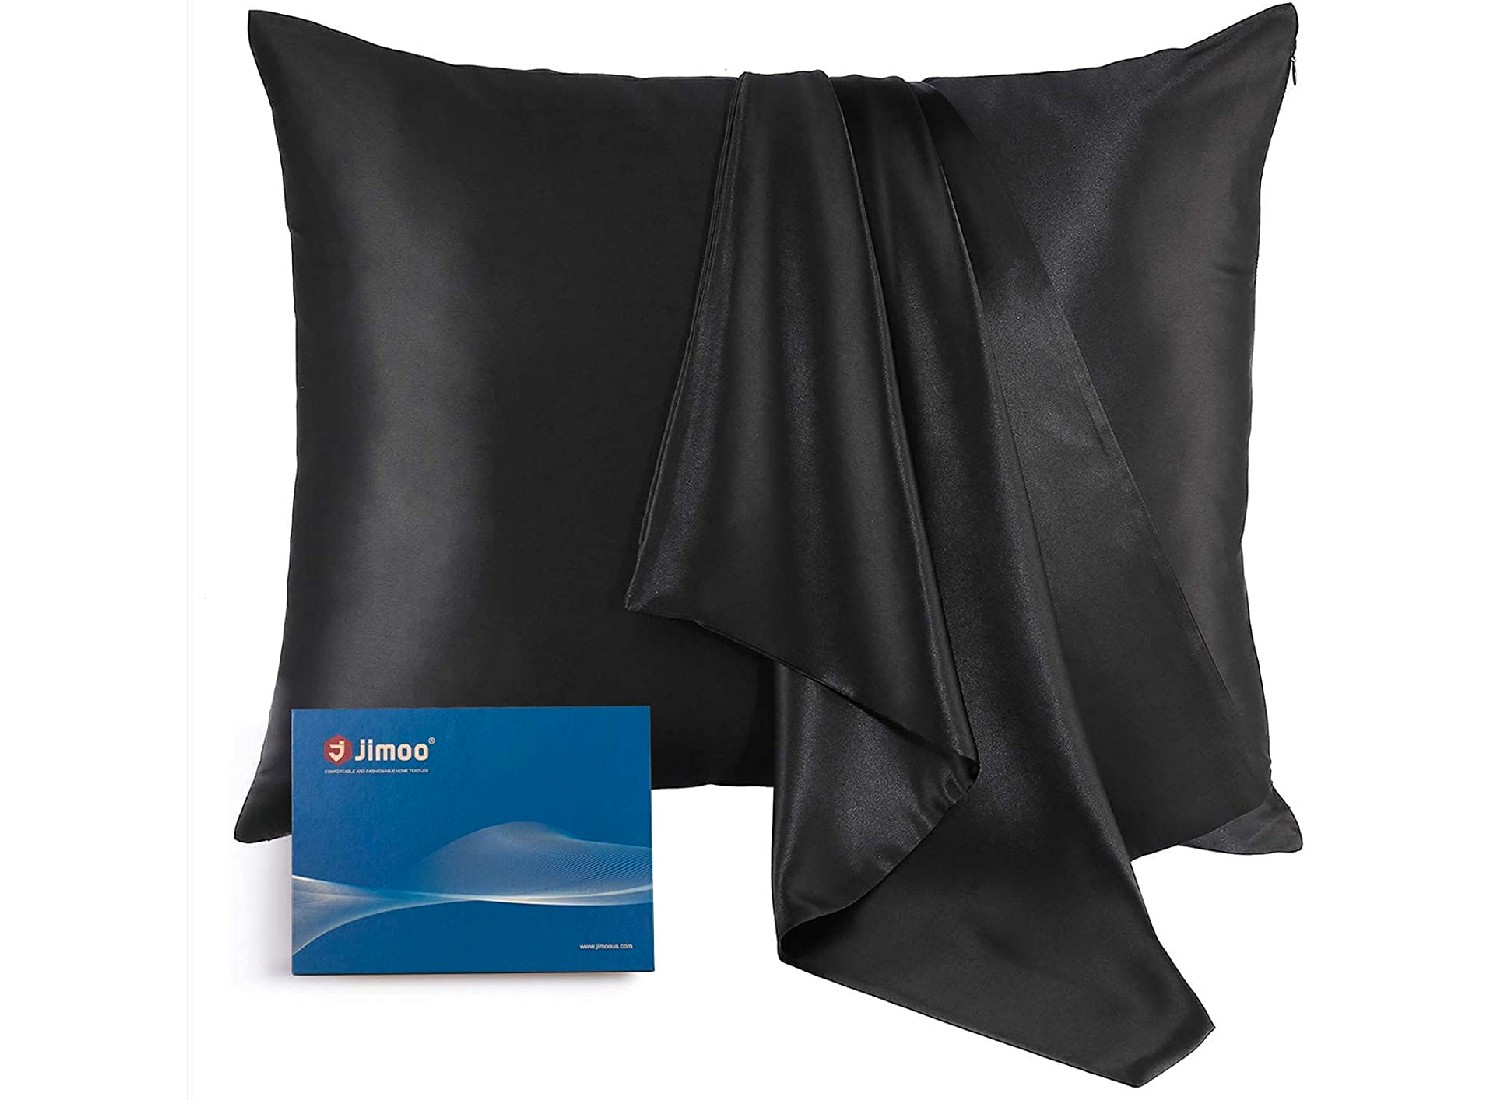 A black pillowcase.